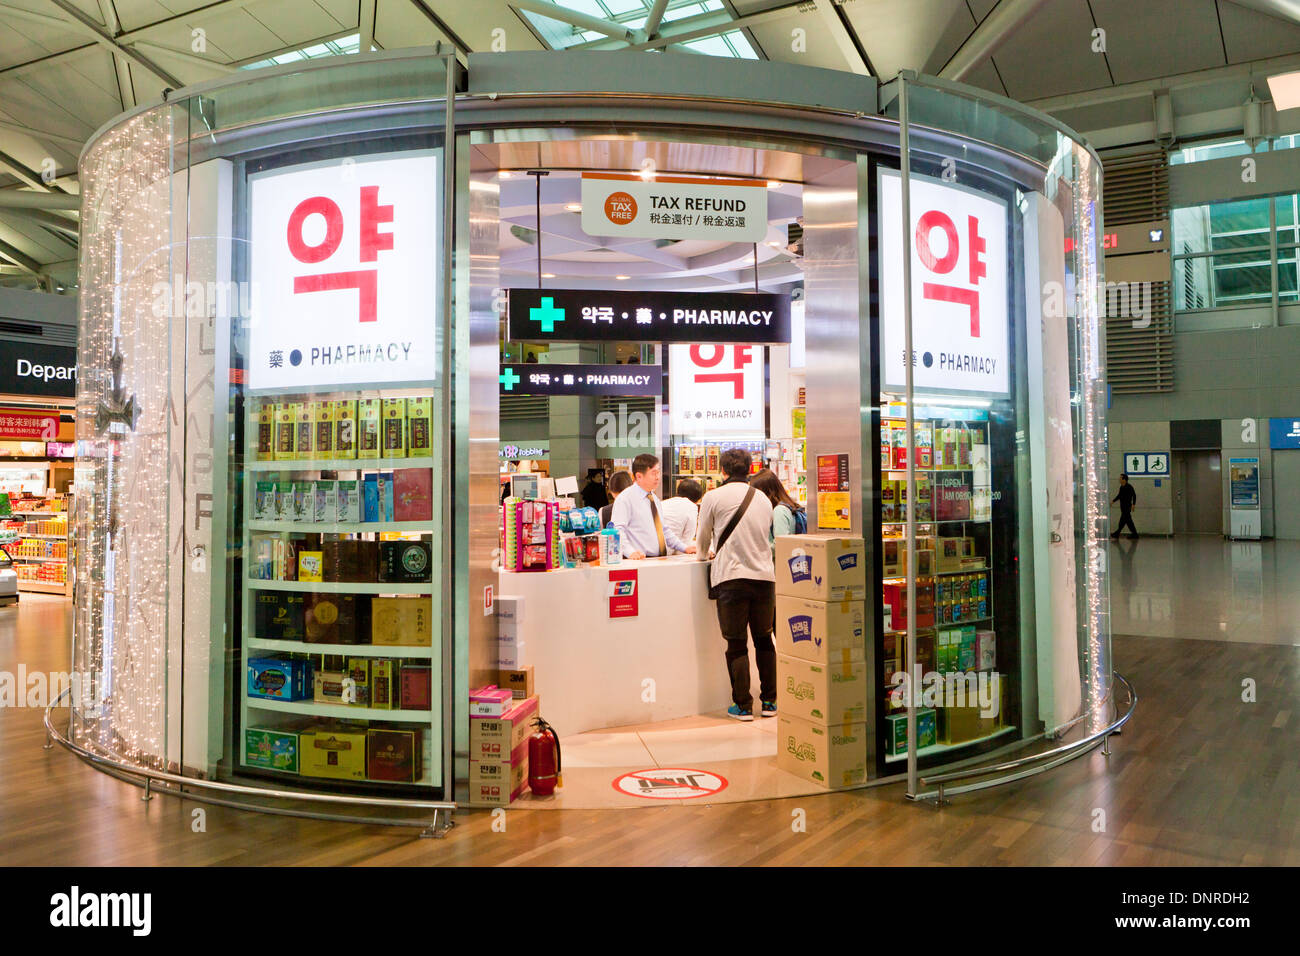 Pharmacy storefront - Seoul, South Korea Stock Photo - Alamy